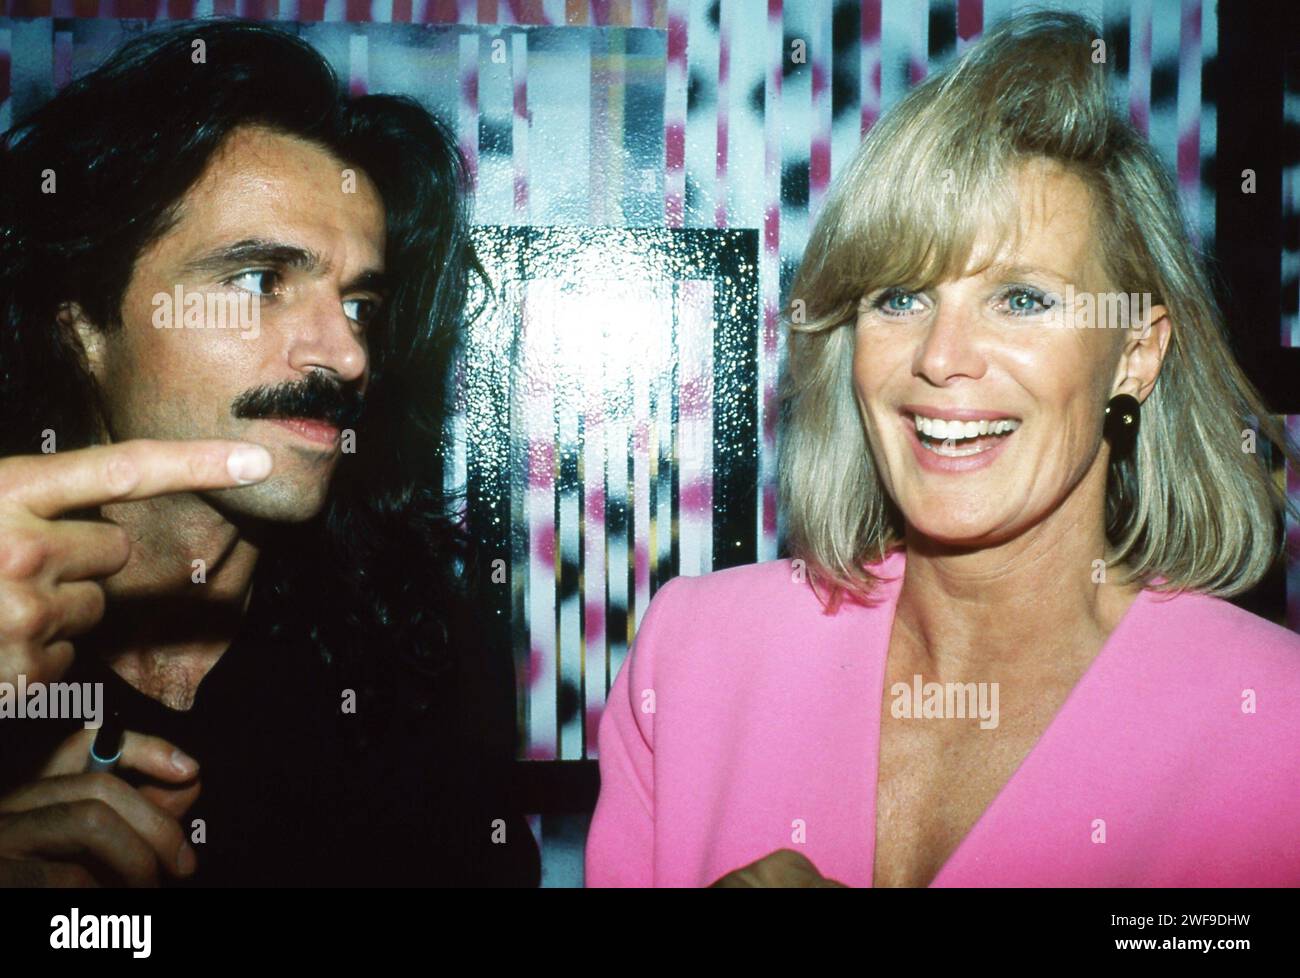 Yanni and Linda Evans at celebrity event, New York 1991. Photo: Oscar Abolafia/Everett Collection (lindaevans016) Stock Photo